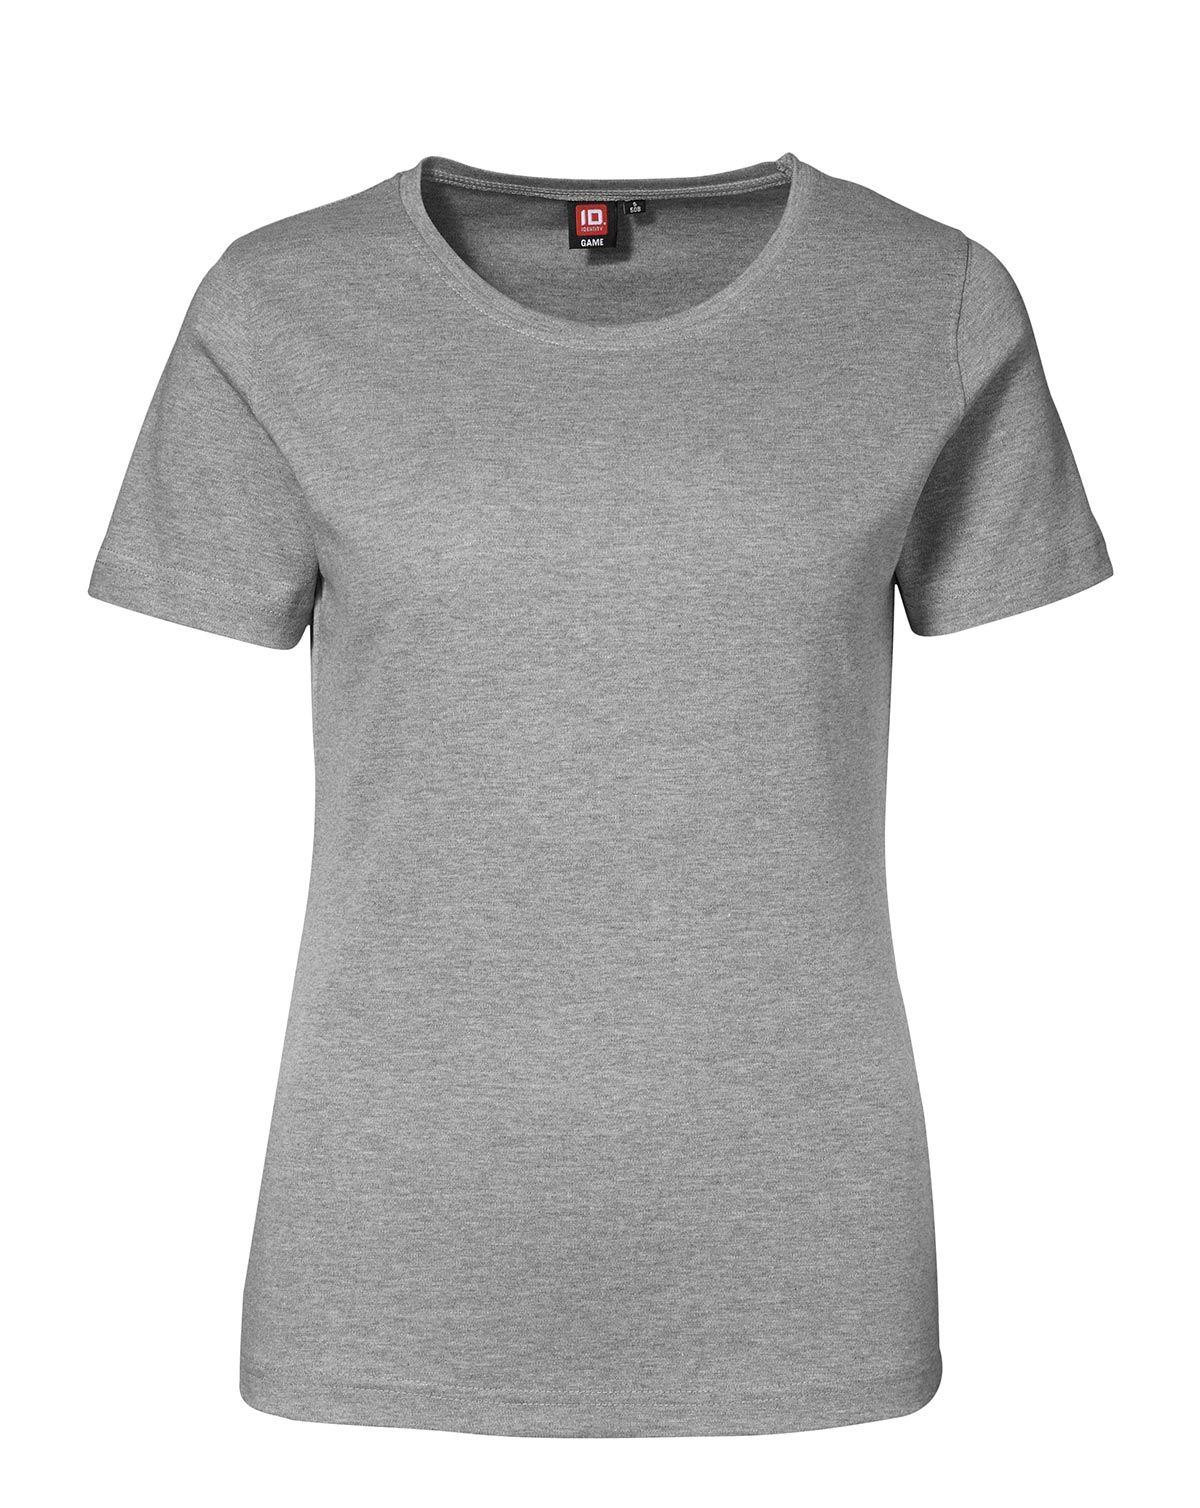 ID Interlock T-shirt til Kvinder (Grå Meleret, S)